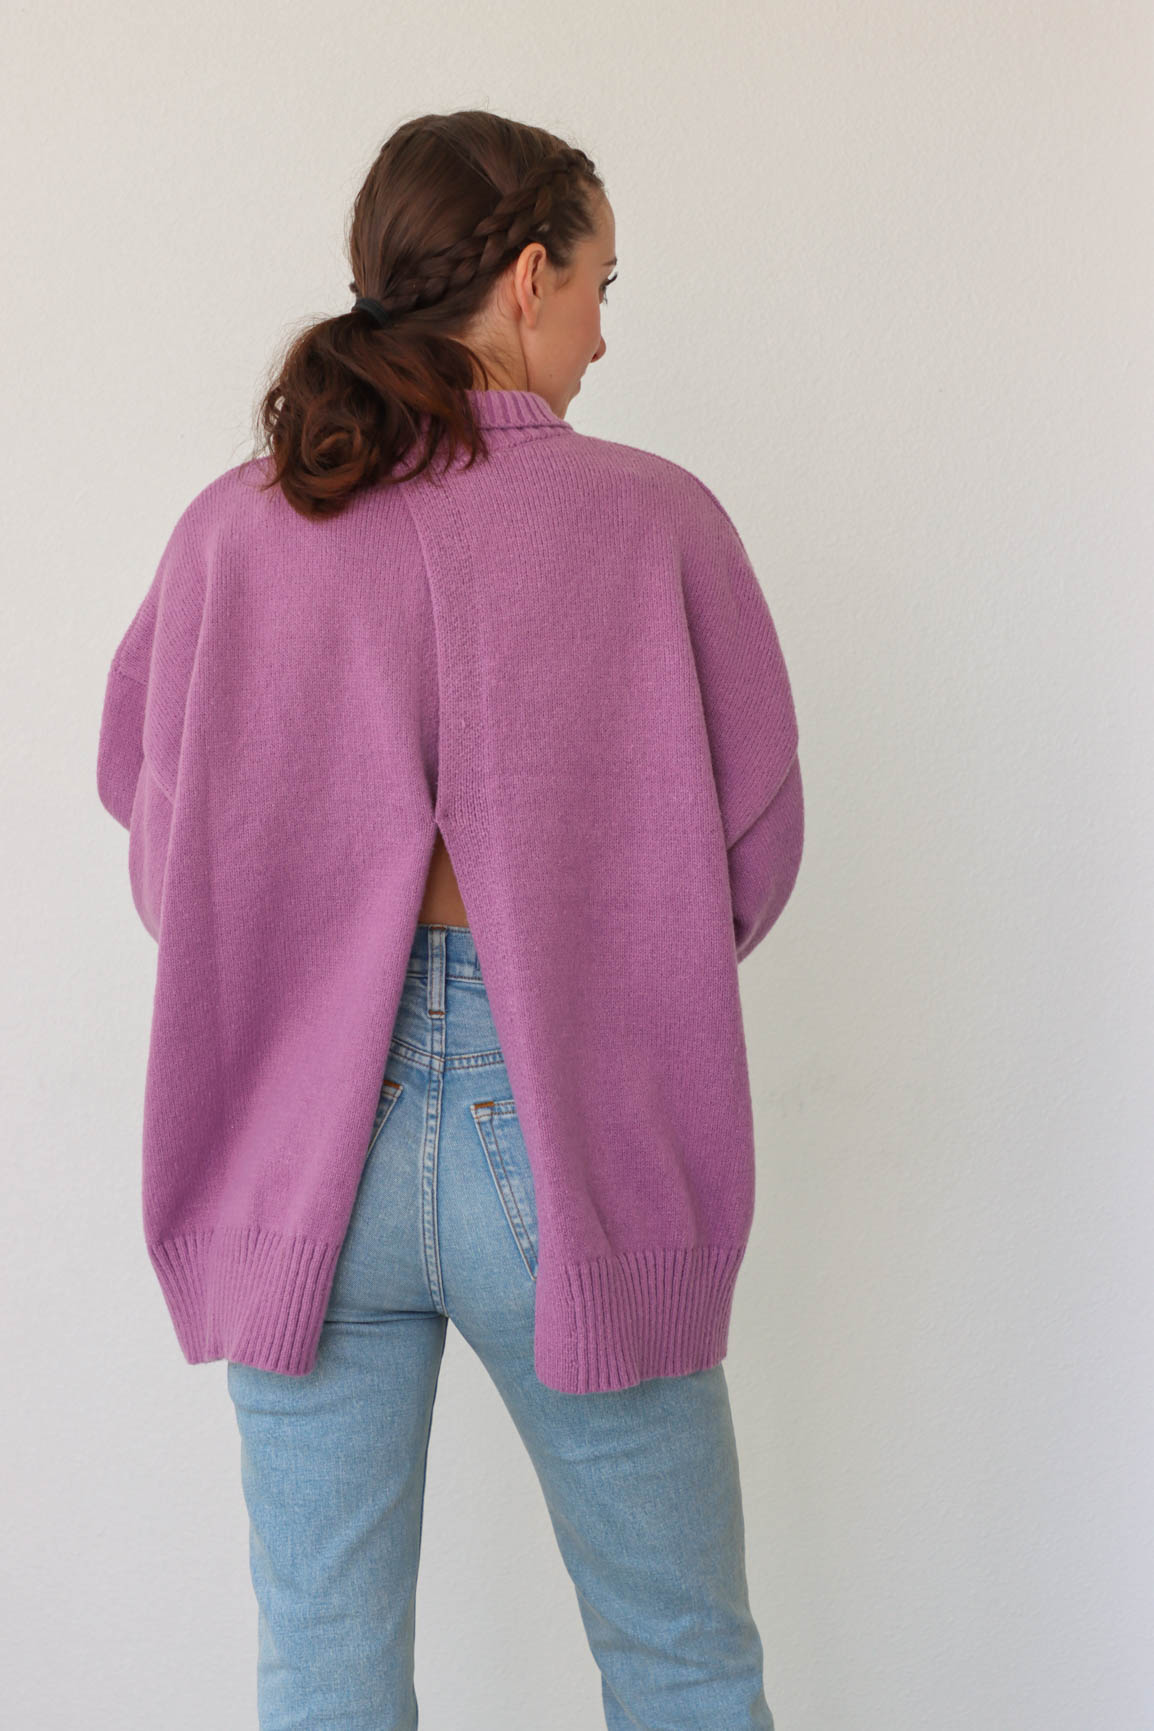 girl wearing purple turtleneck sweater